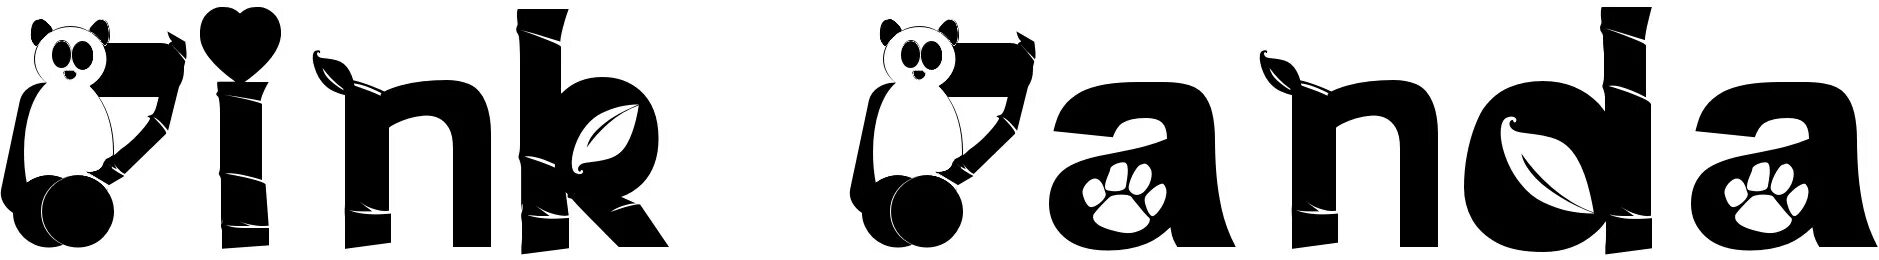 Панда шрифт. Панда из шрифта __. Панда красивым шрифтом. Cute Panda шрифт.